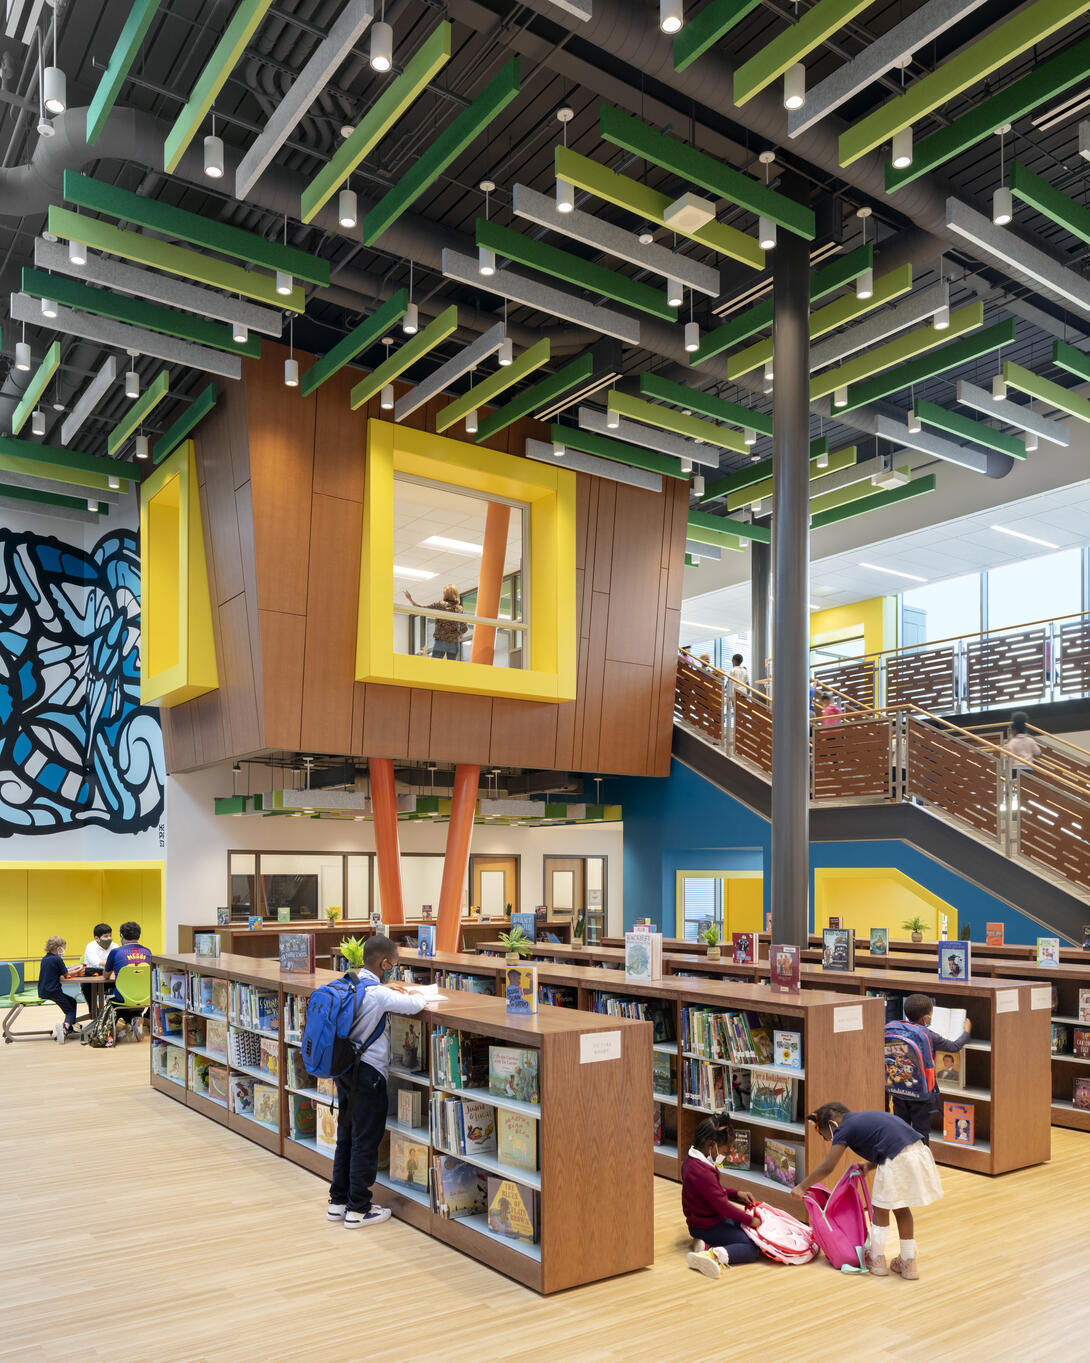 Children inside a school library at John Lewis Elementary School